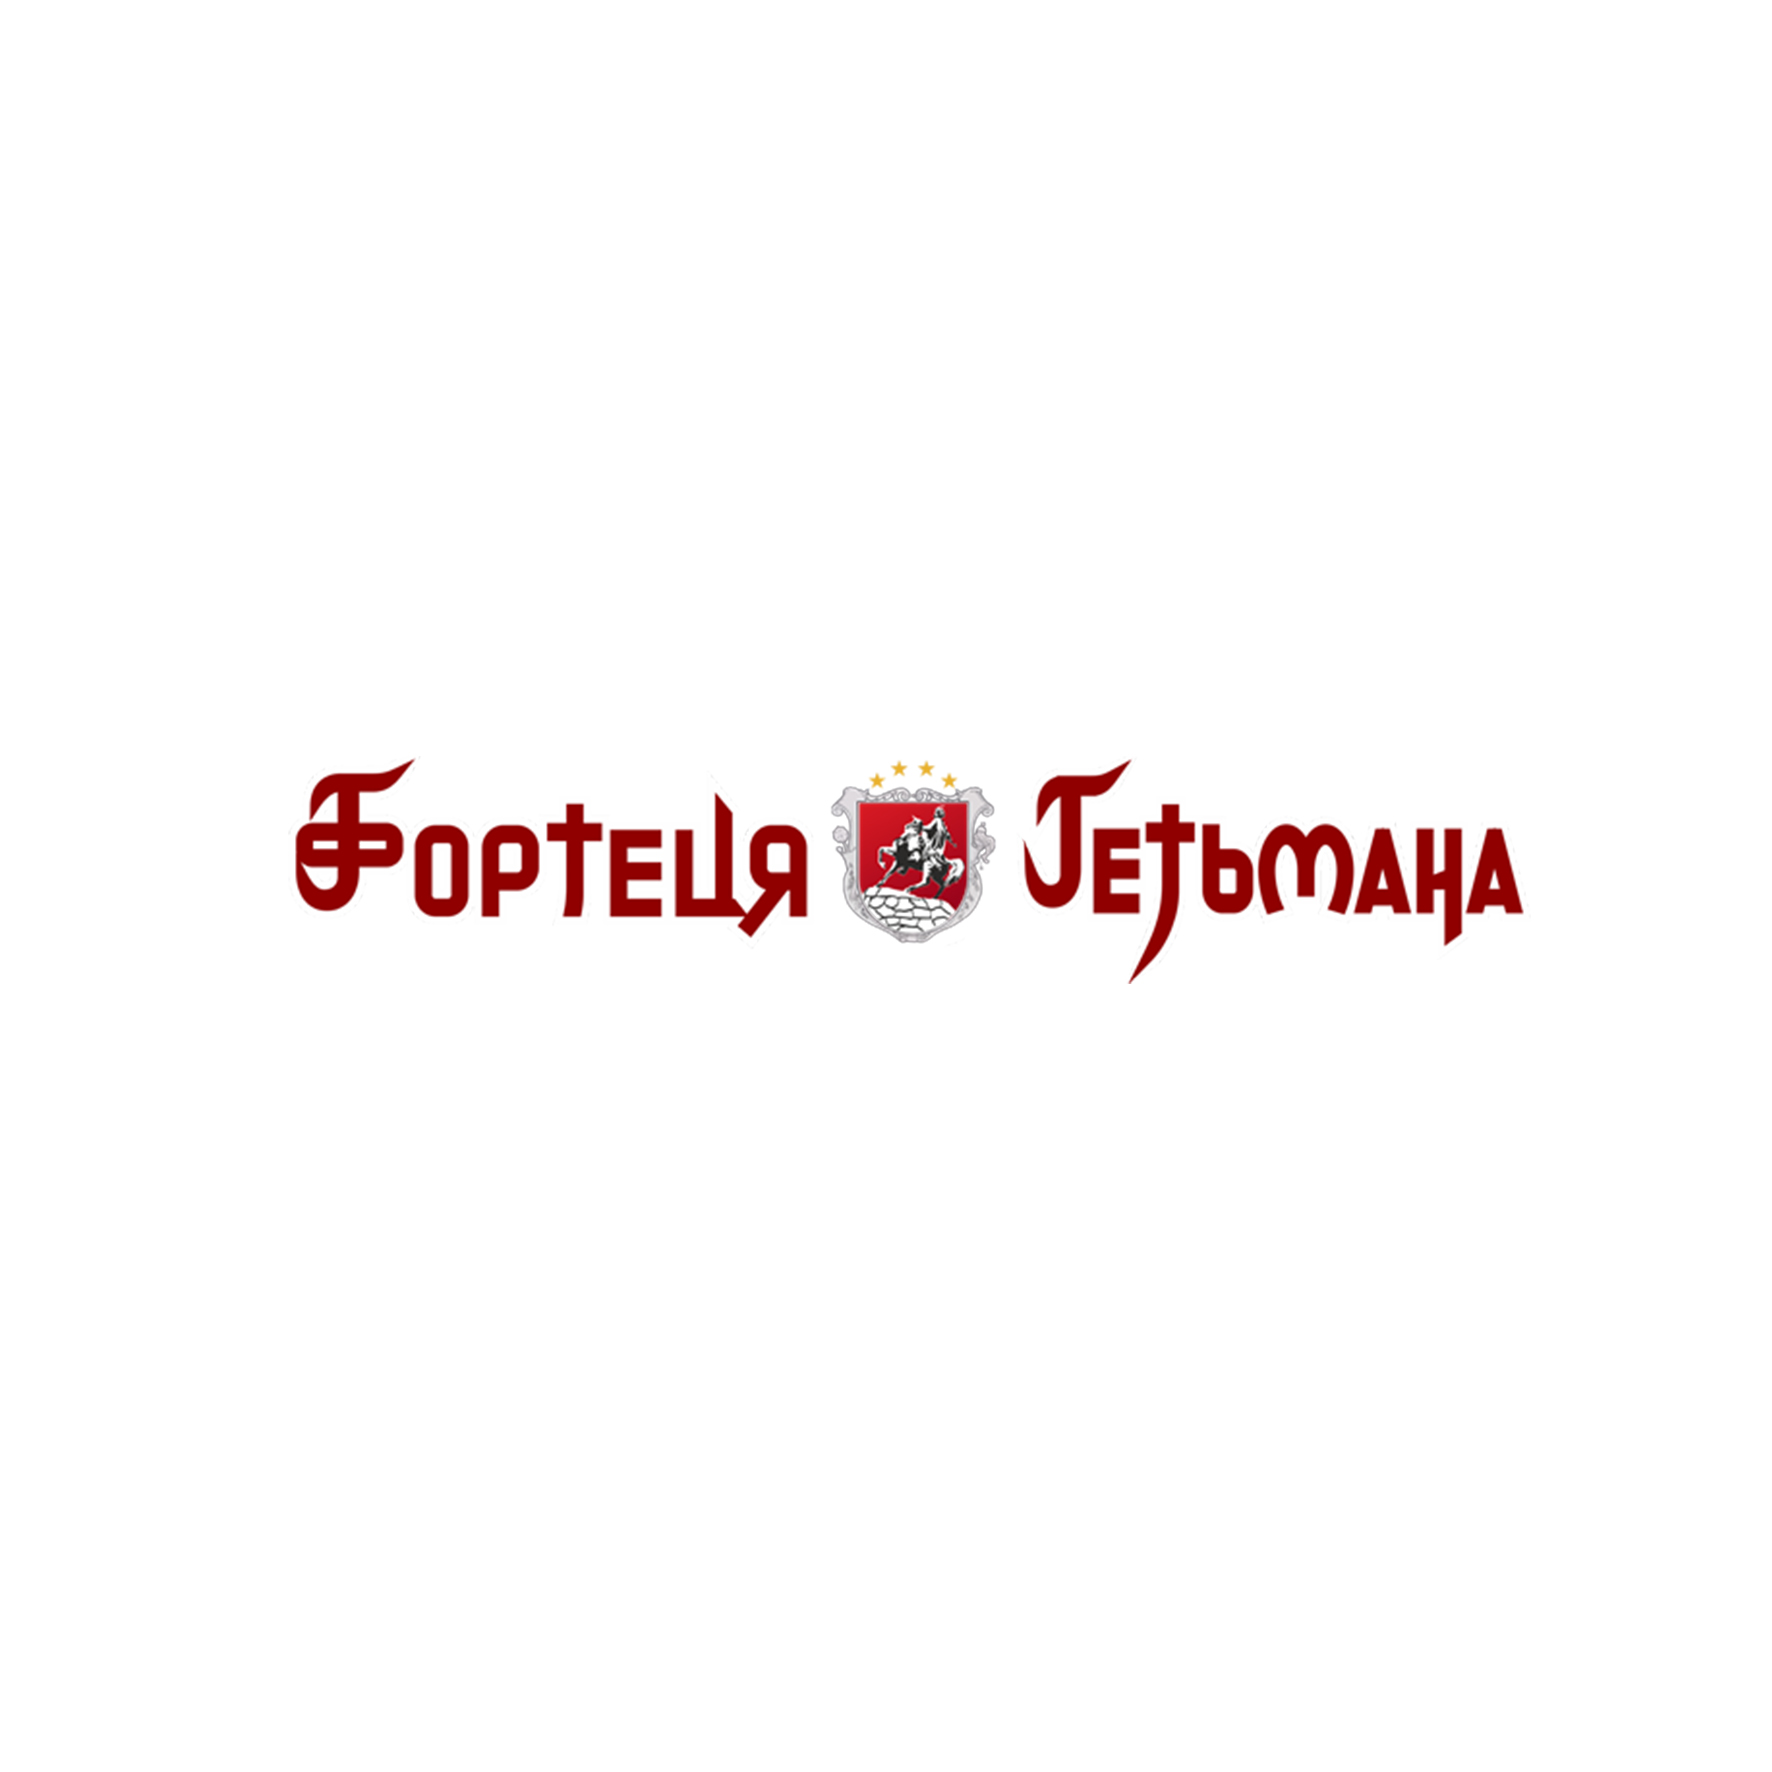 FORTETSYA HETMANA  is a gastronomic partner of the tournament